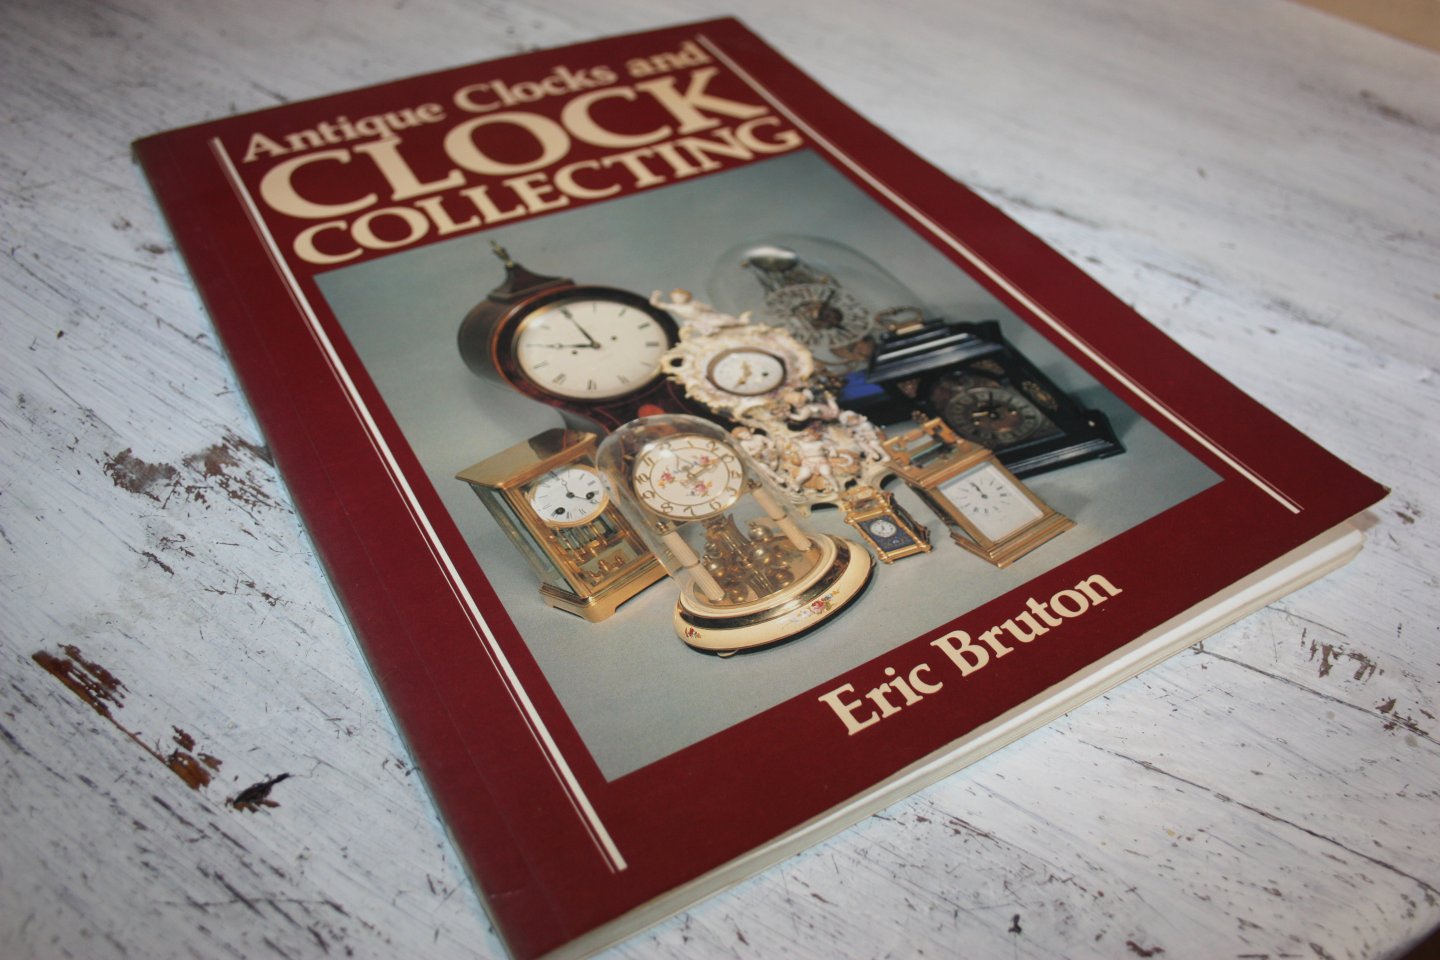 Bruton, Eric - ANTIQUE CLOKS AND CLOCK COLLECTING